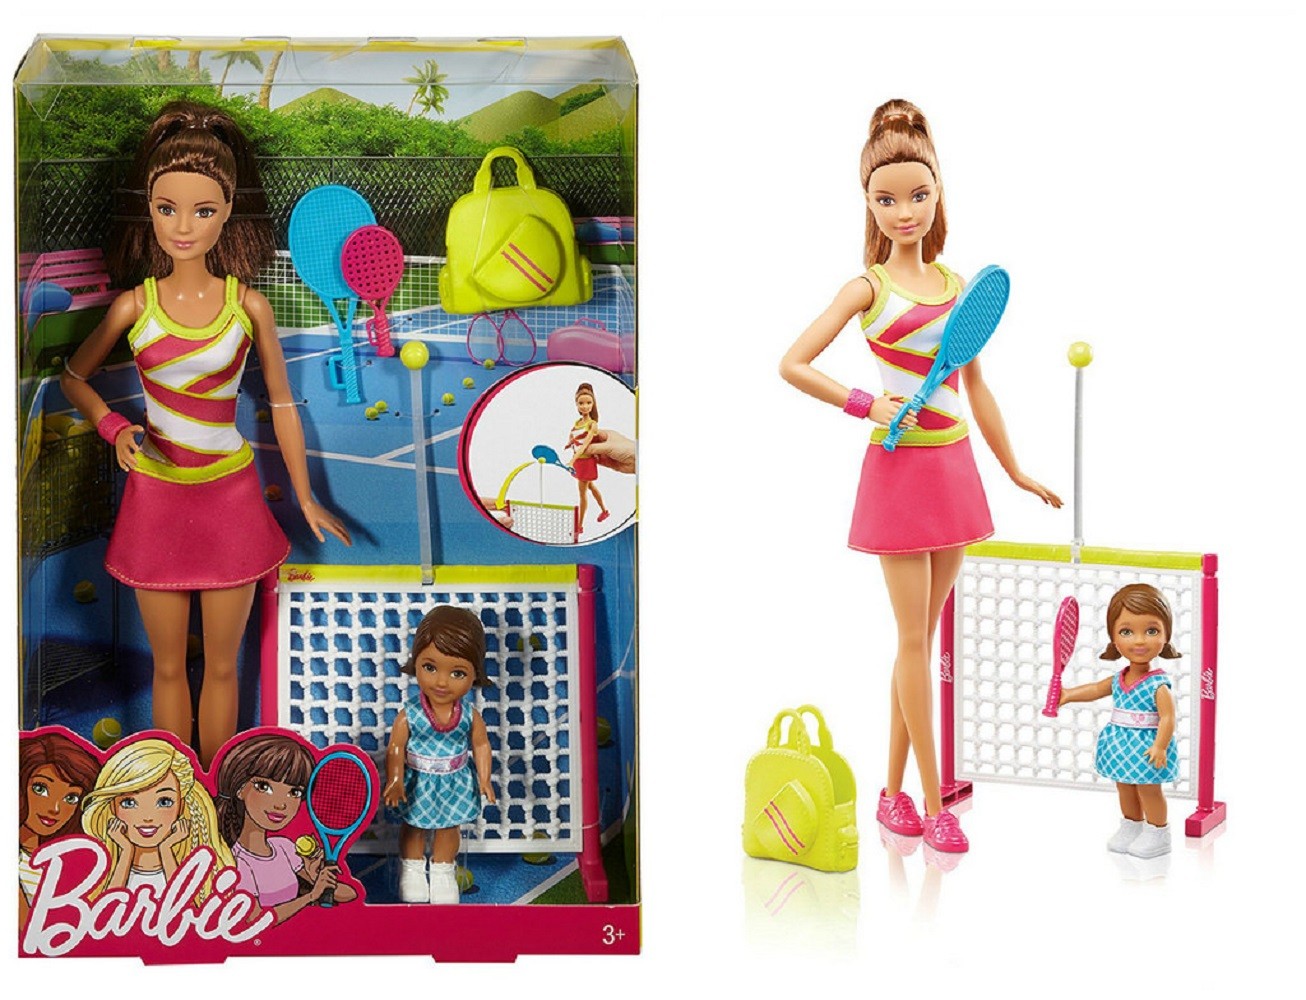 barbie tennis coach